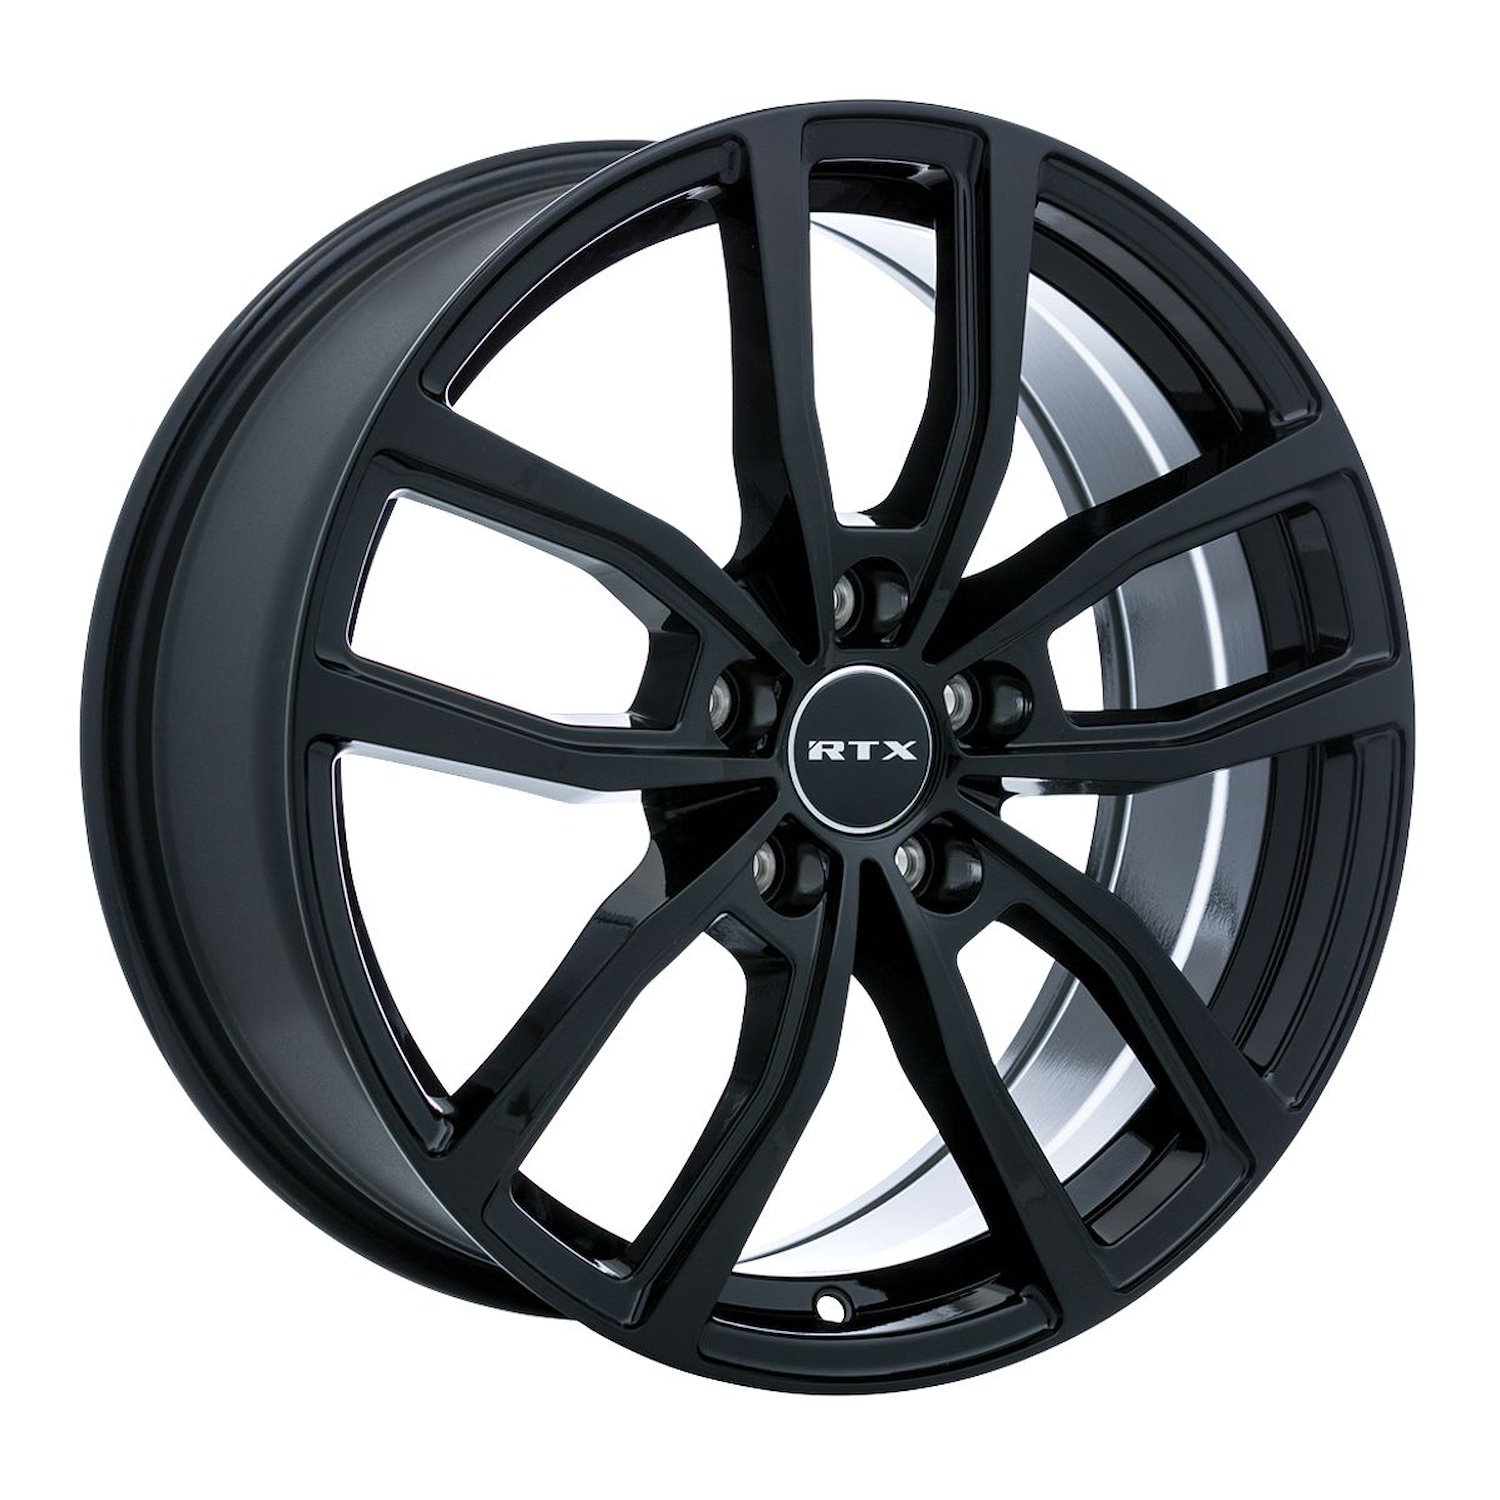 163703 RTX-Series Solstice Wheel [Size: 17" x 7"] Gloss Black Finish